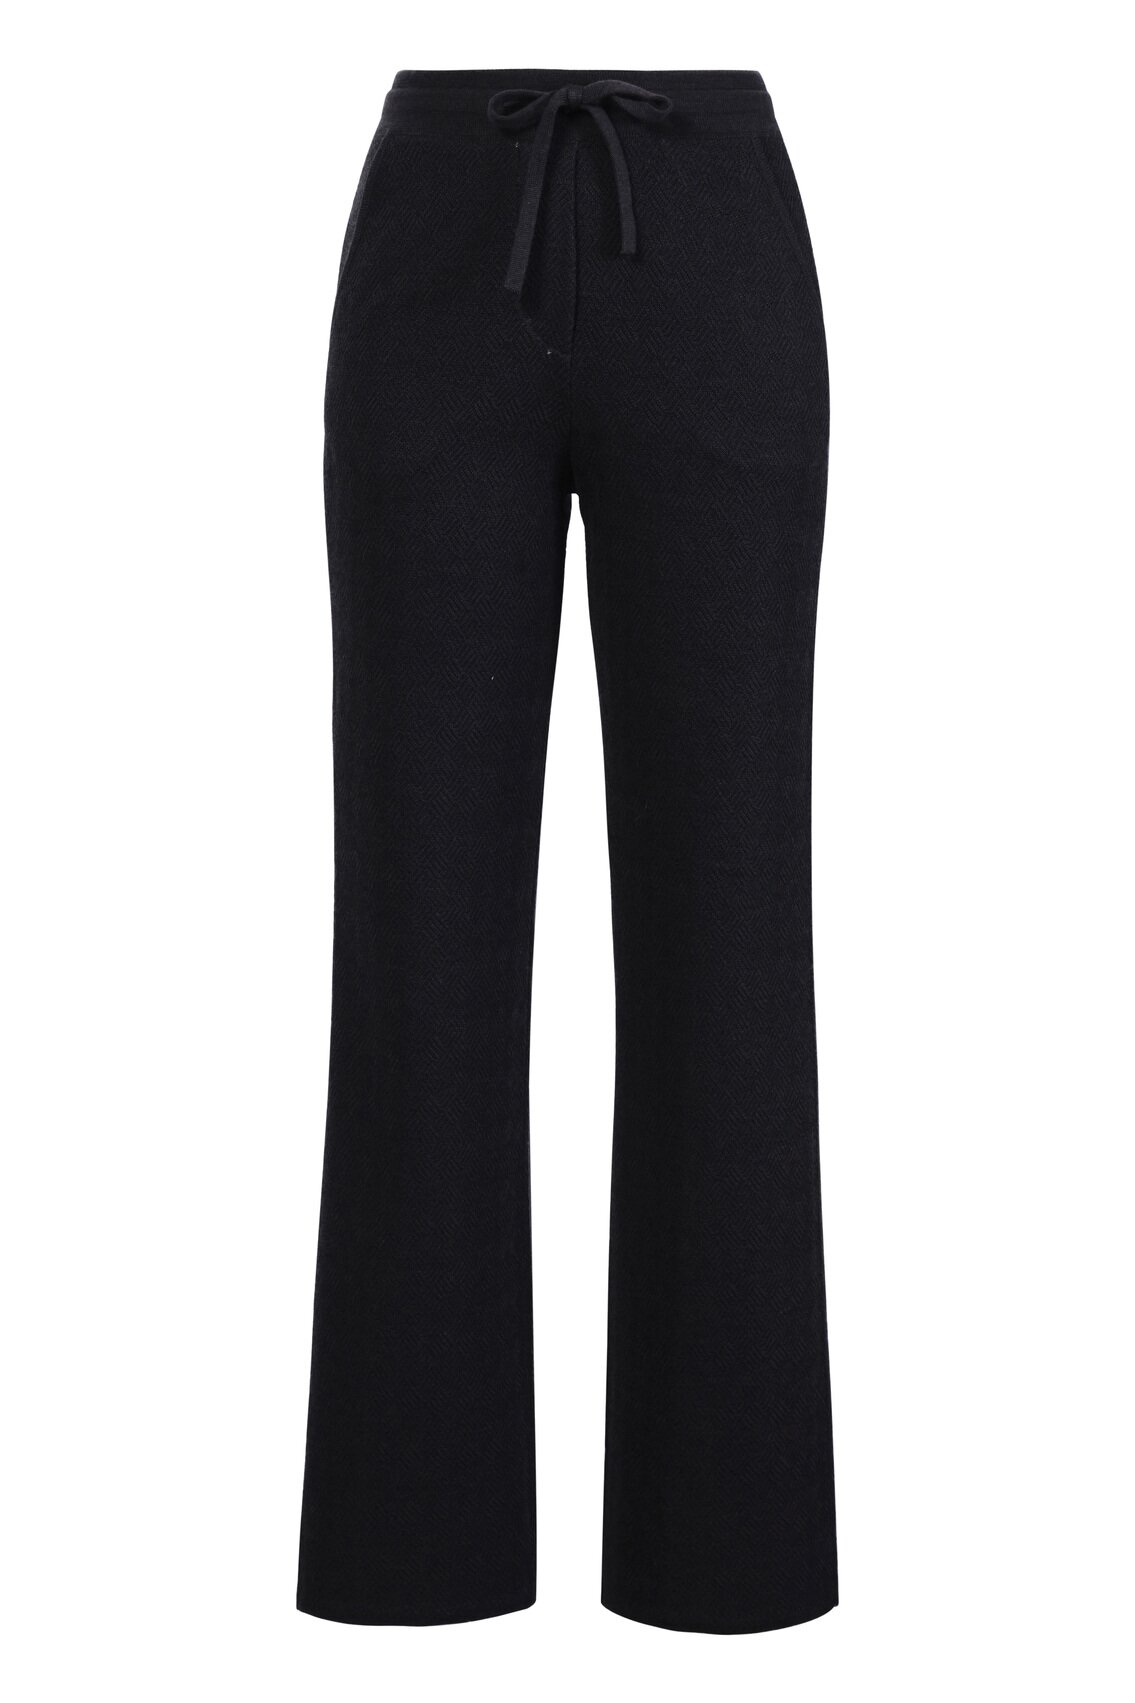 Solid Knitted Pants - Black - Pants - Ivko Woman